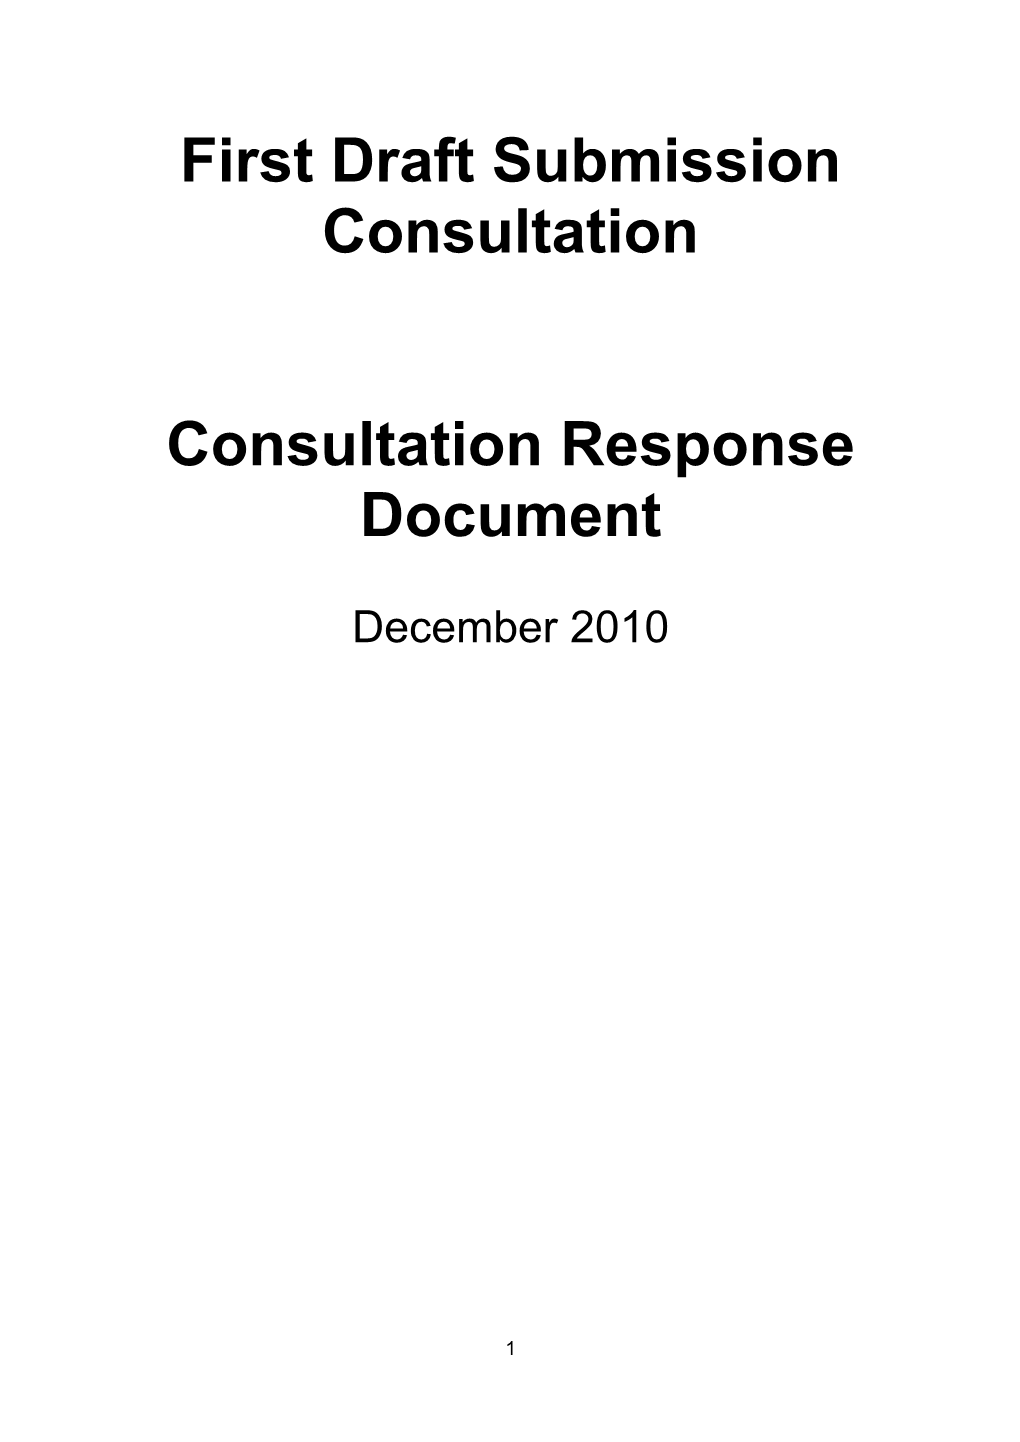 Download Consultation Response Document